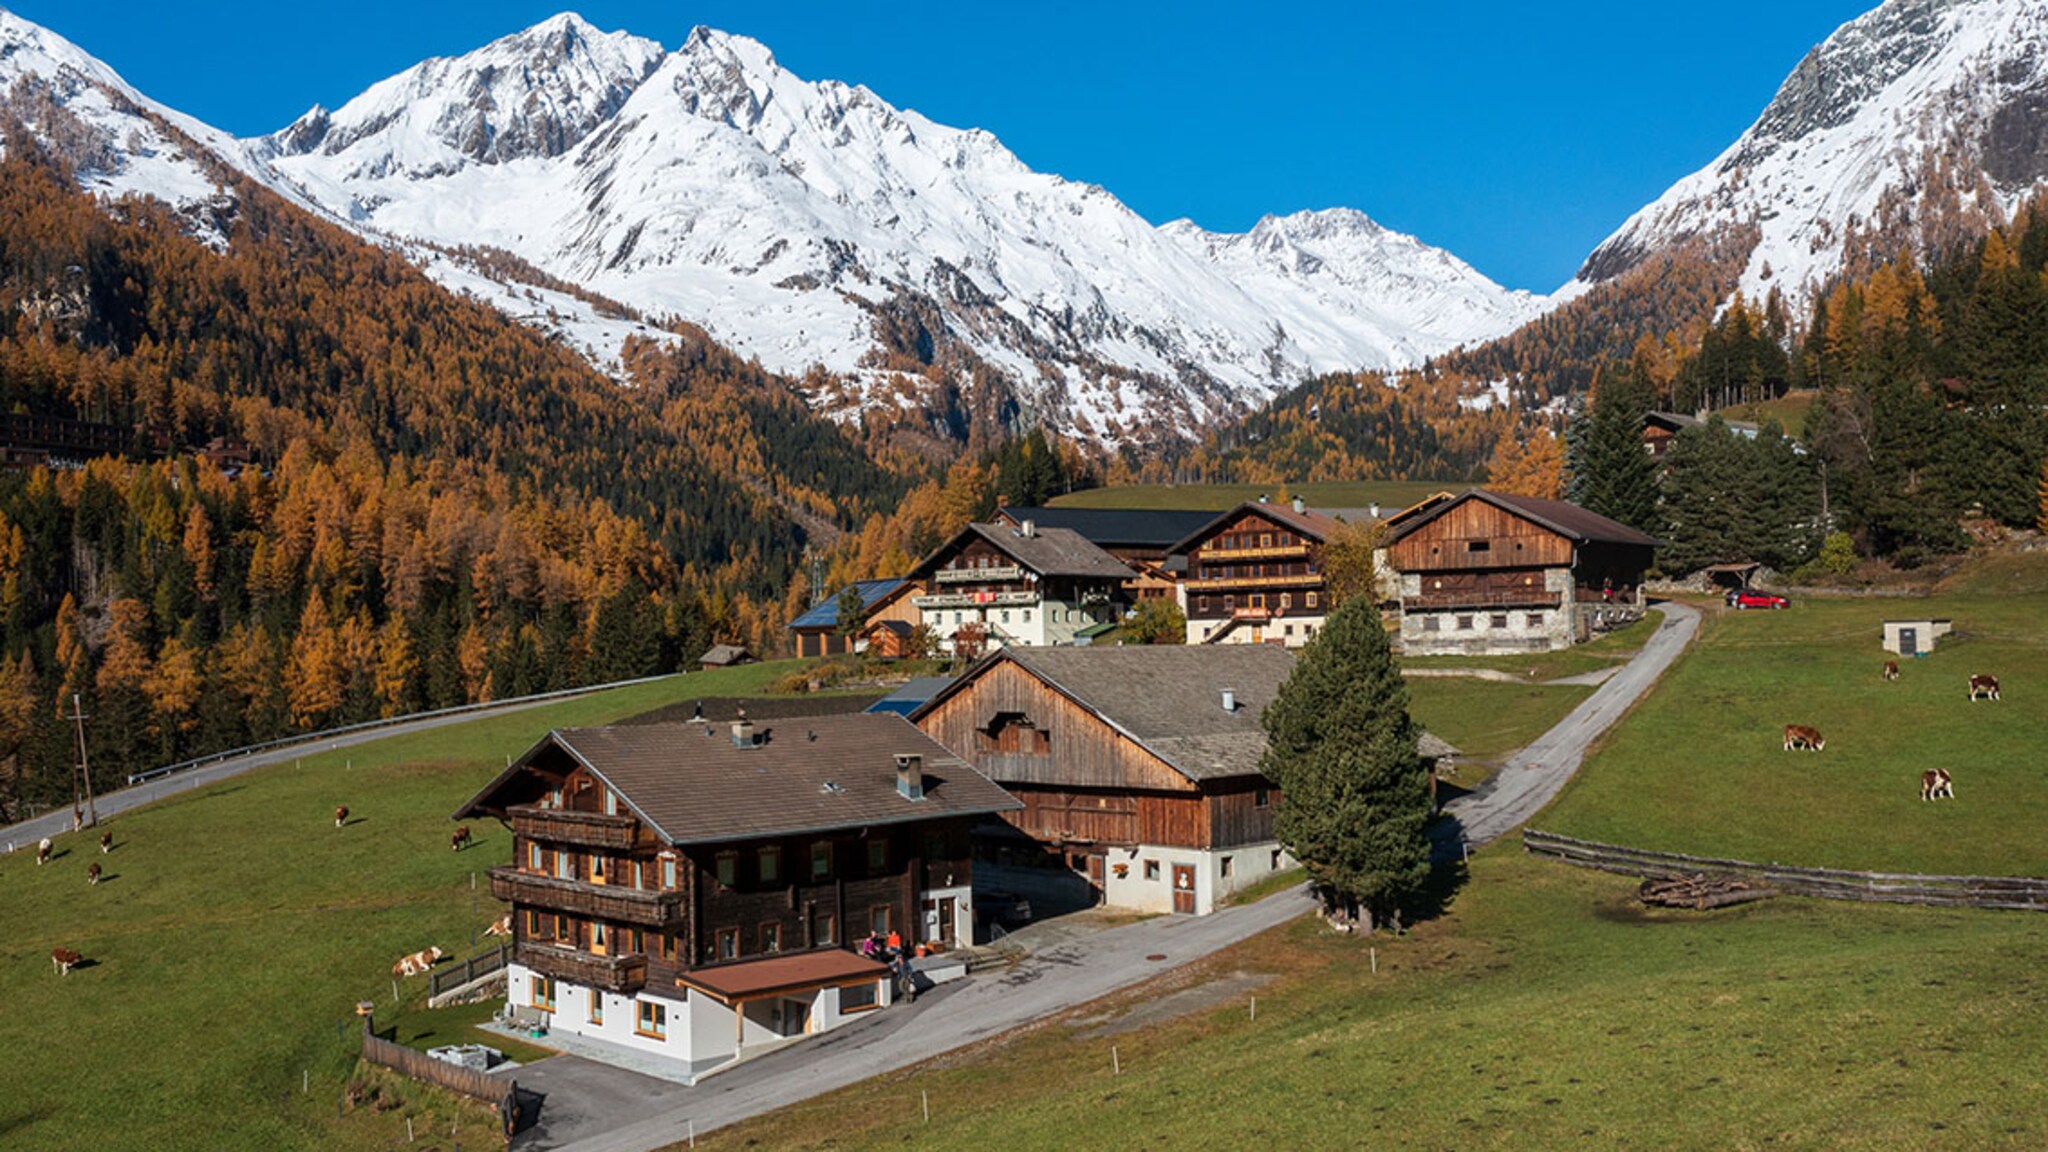 There are no winter sports in Austria for the unvaccinated